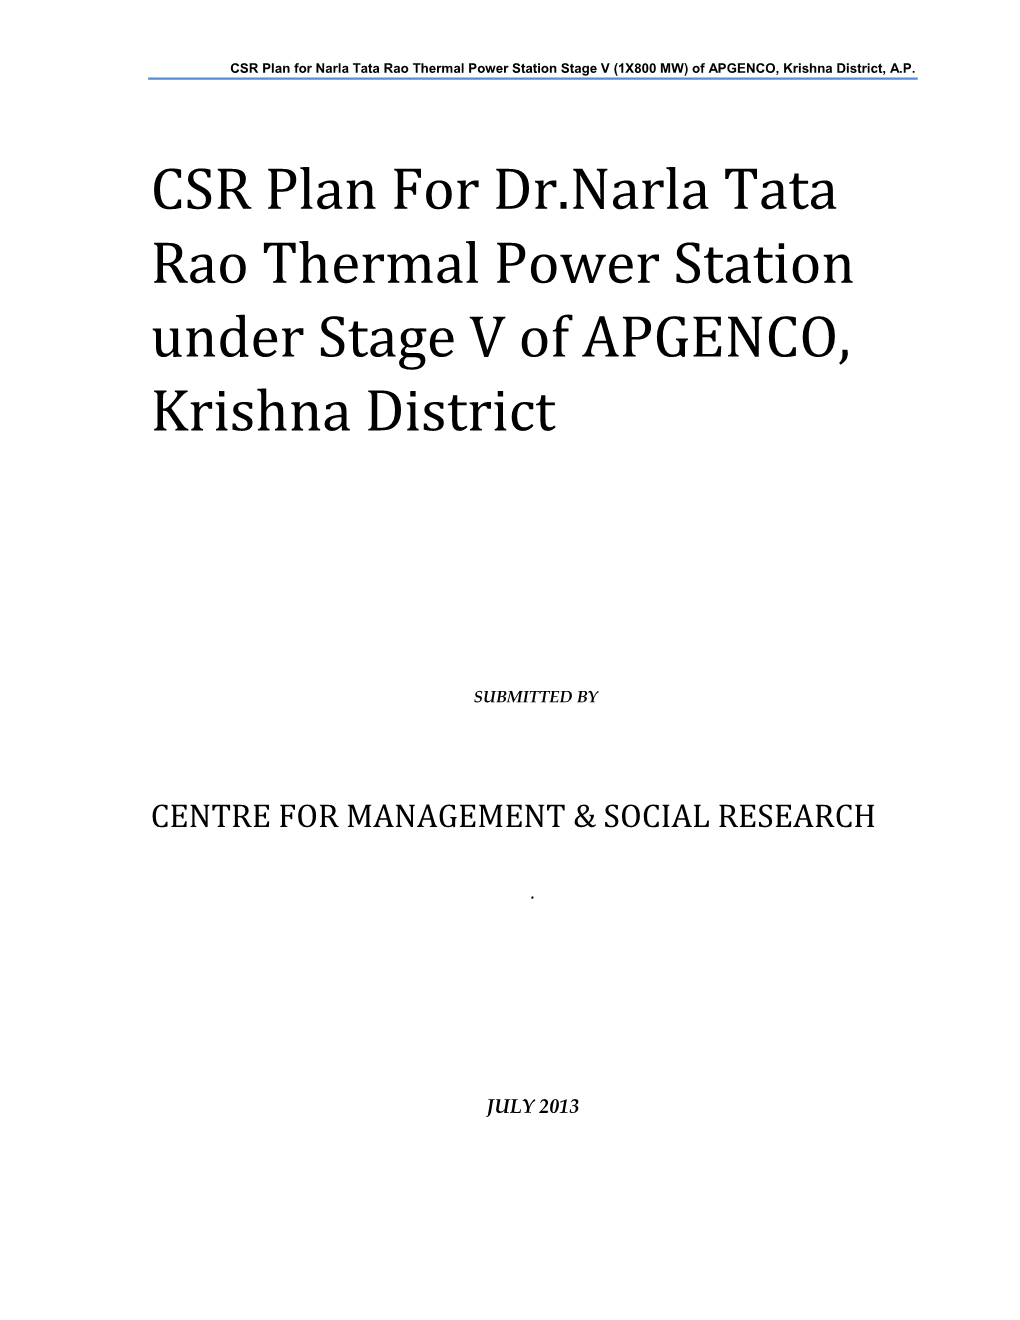 CSR Plan for Dr.Narla Tata Rao Thermal Power Station Under Stage V of APGENCO, Krishna District